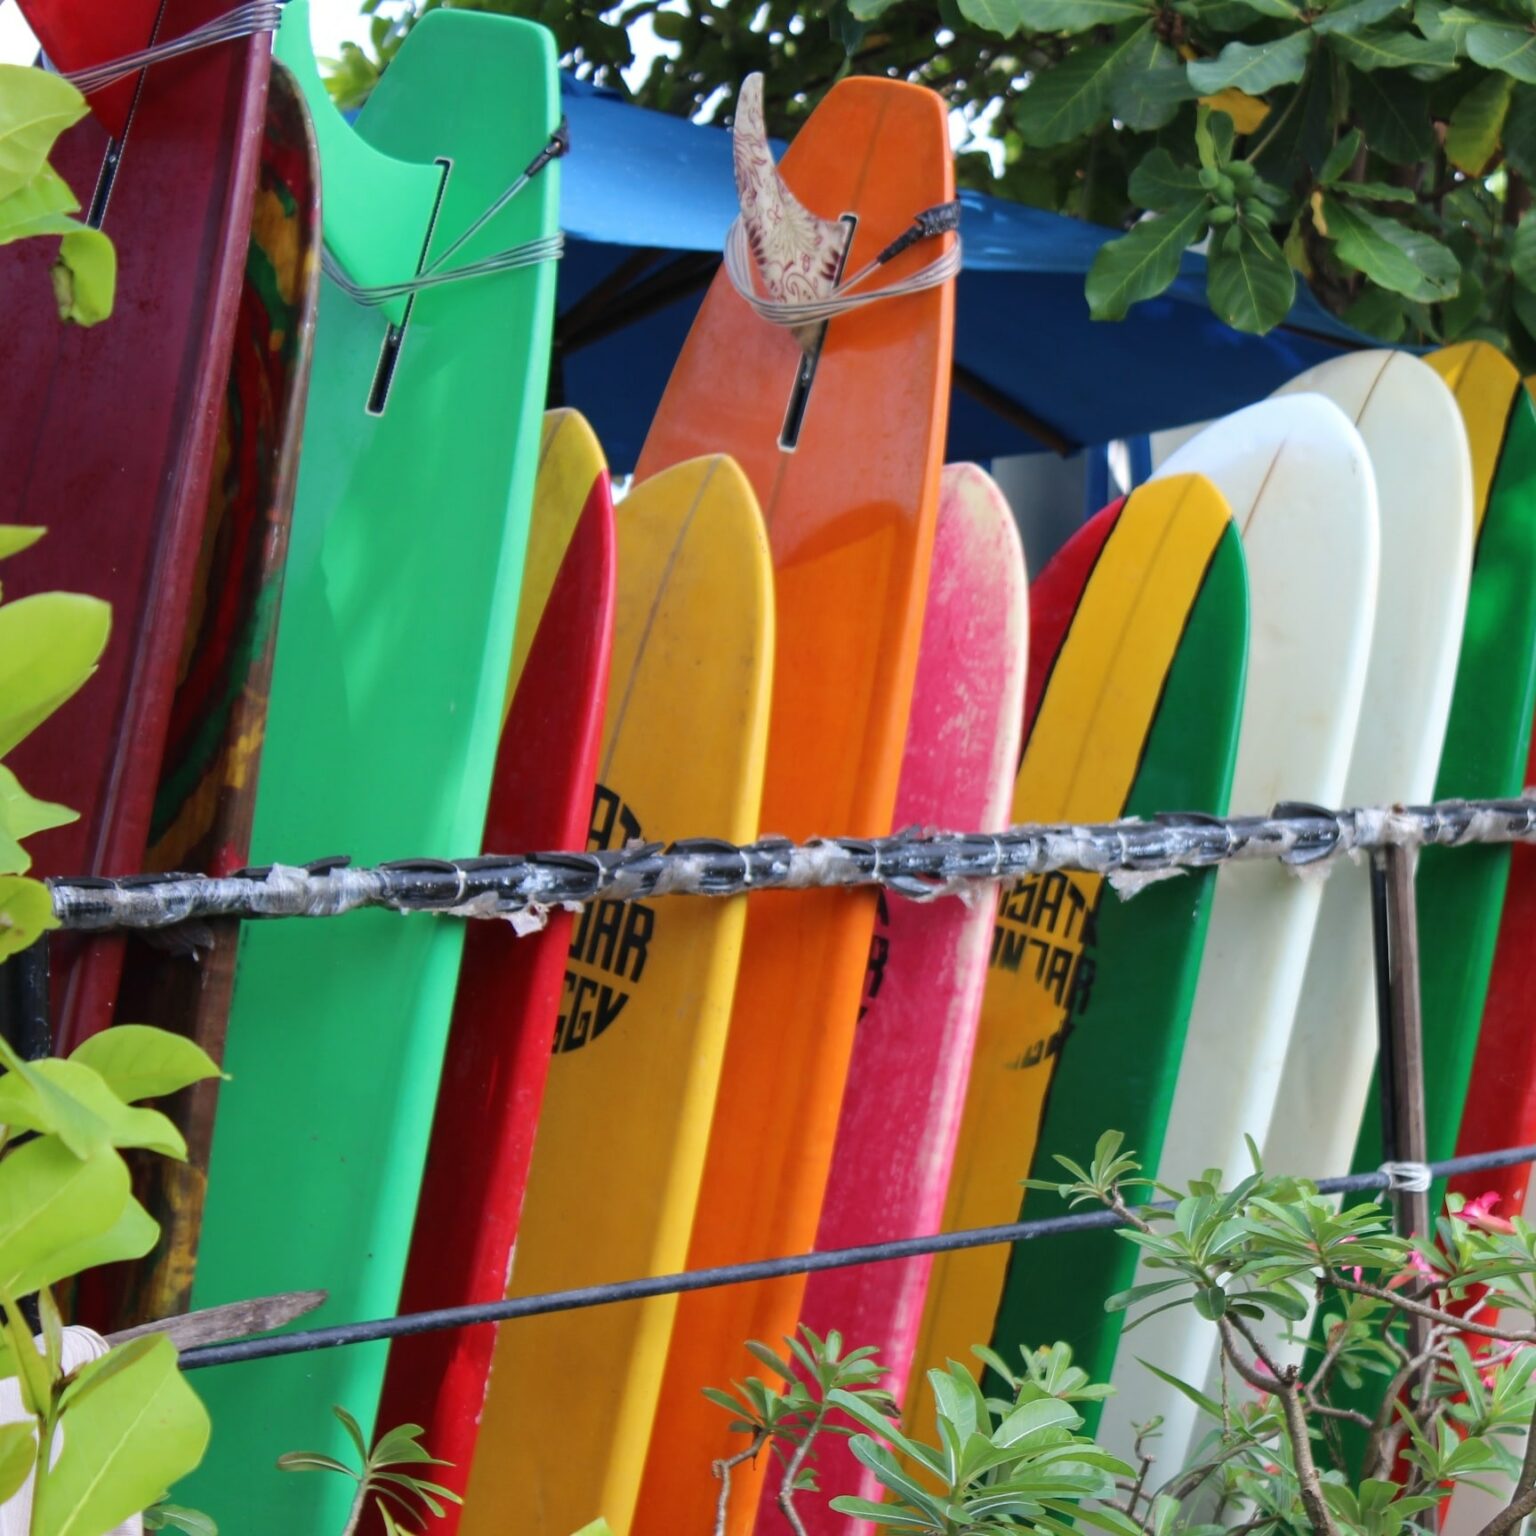 surfboards at Bali Surf School